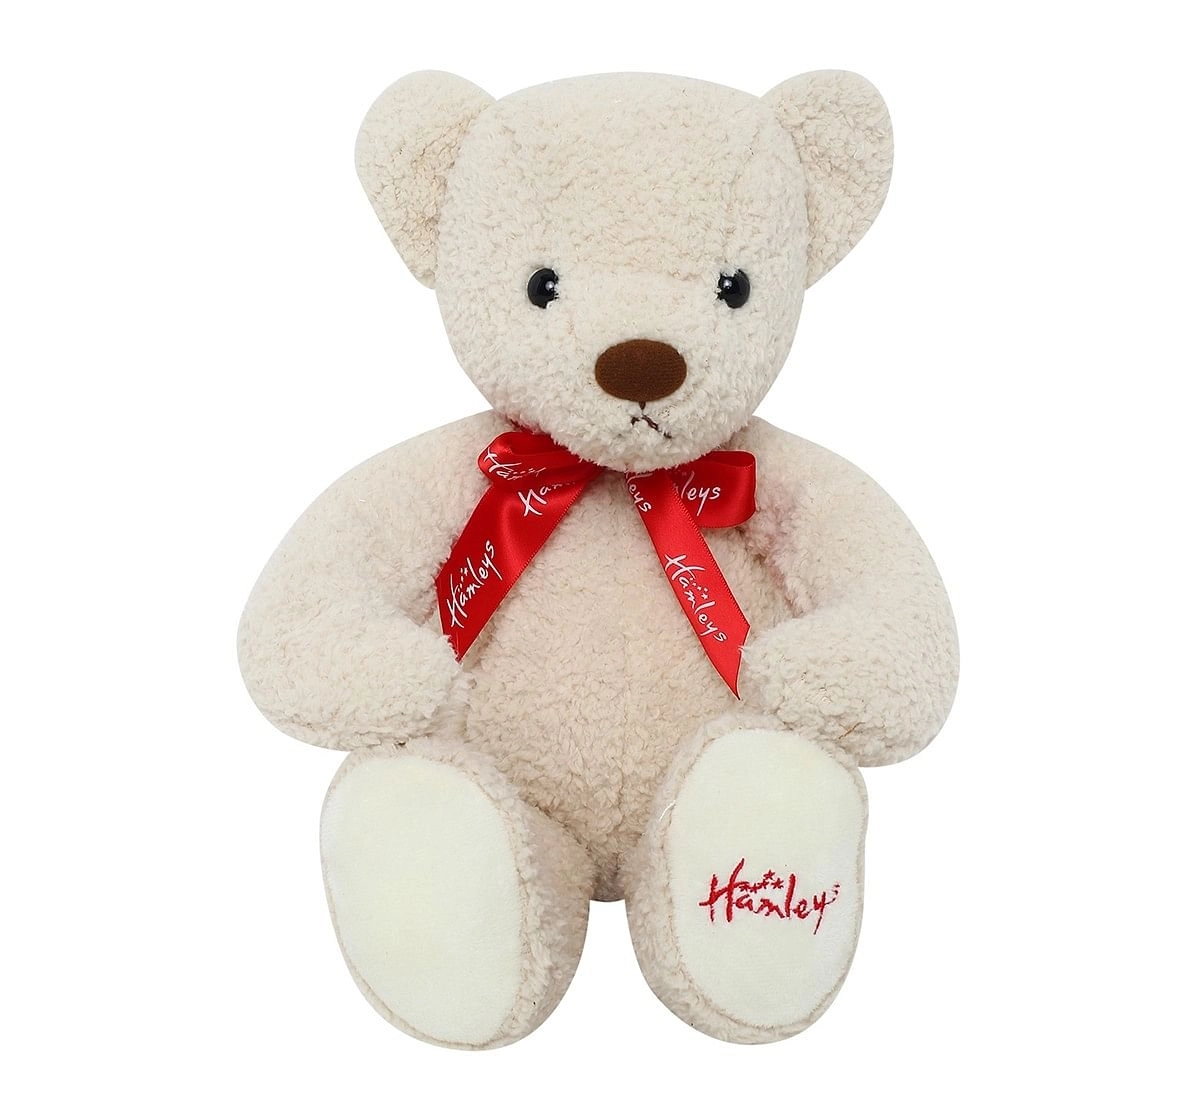  Hamleys Bear Vanilla Teddy Bears for Kids age 3Y+ - 41 Cm (White)